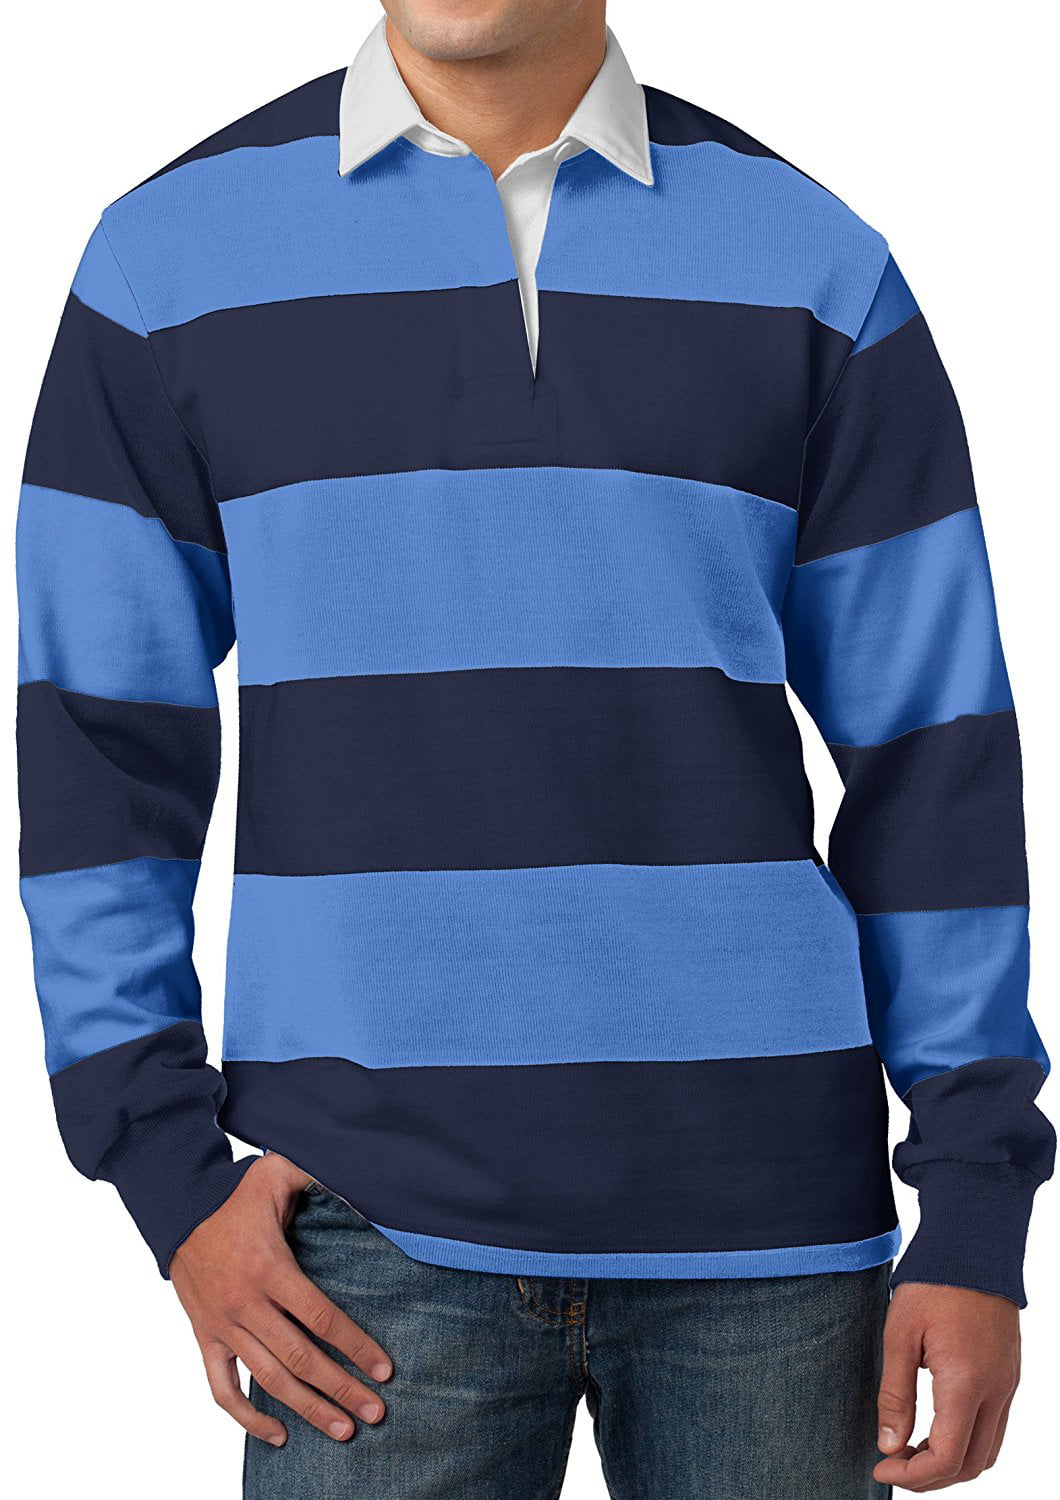 Mens Long Sleeve Rugby Shirt - Navy/Carolina Blue, Large - Walmart.com